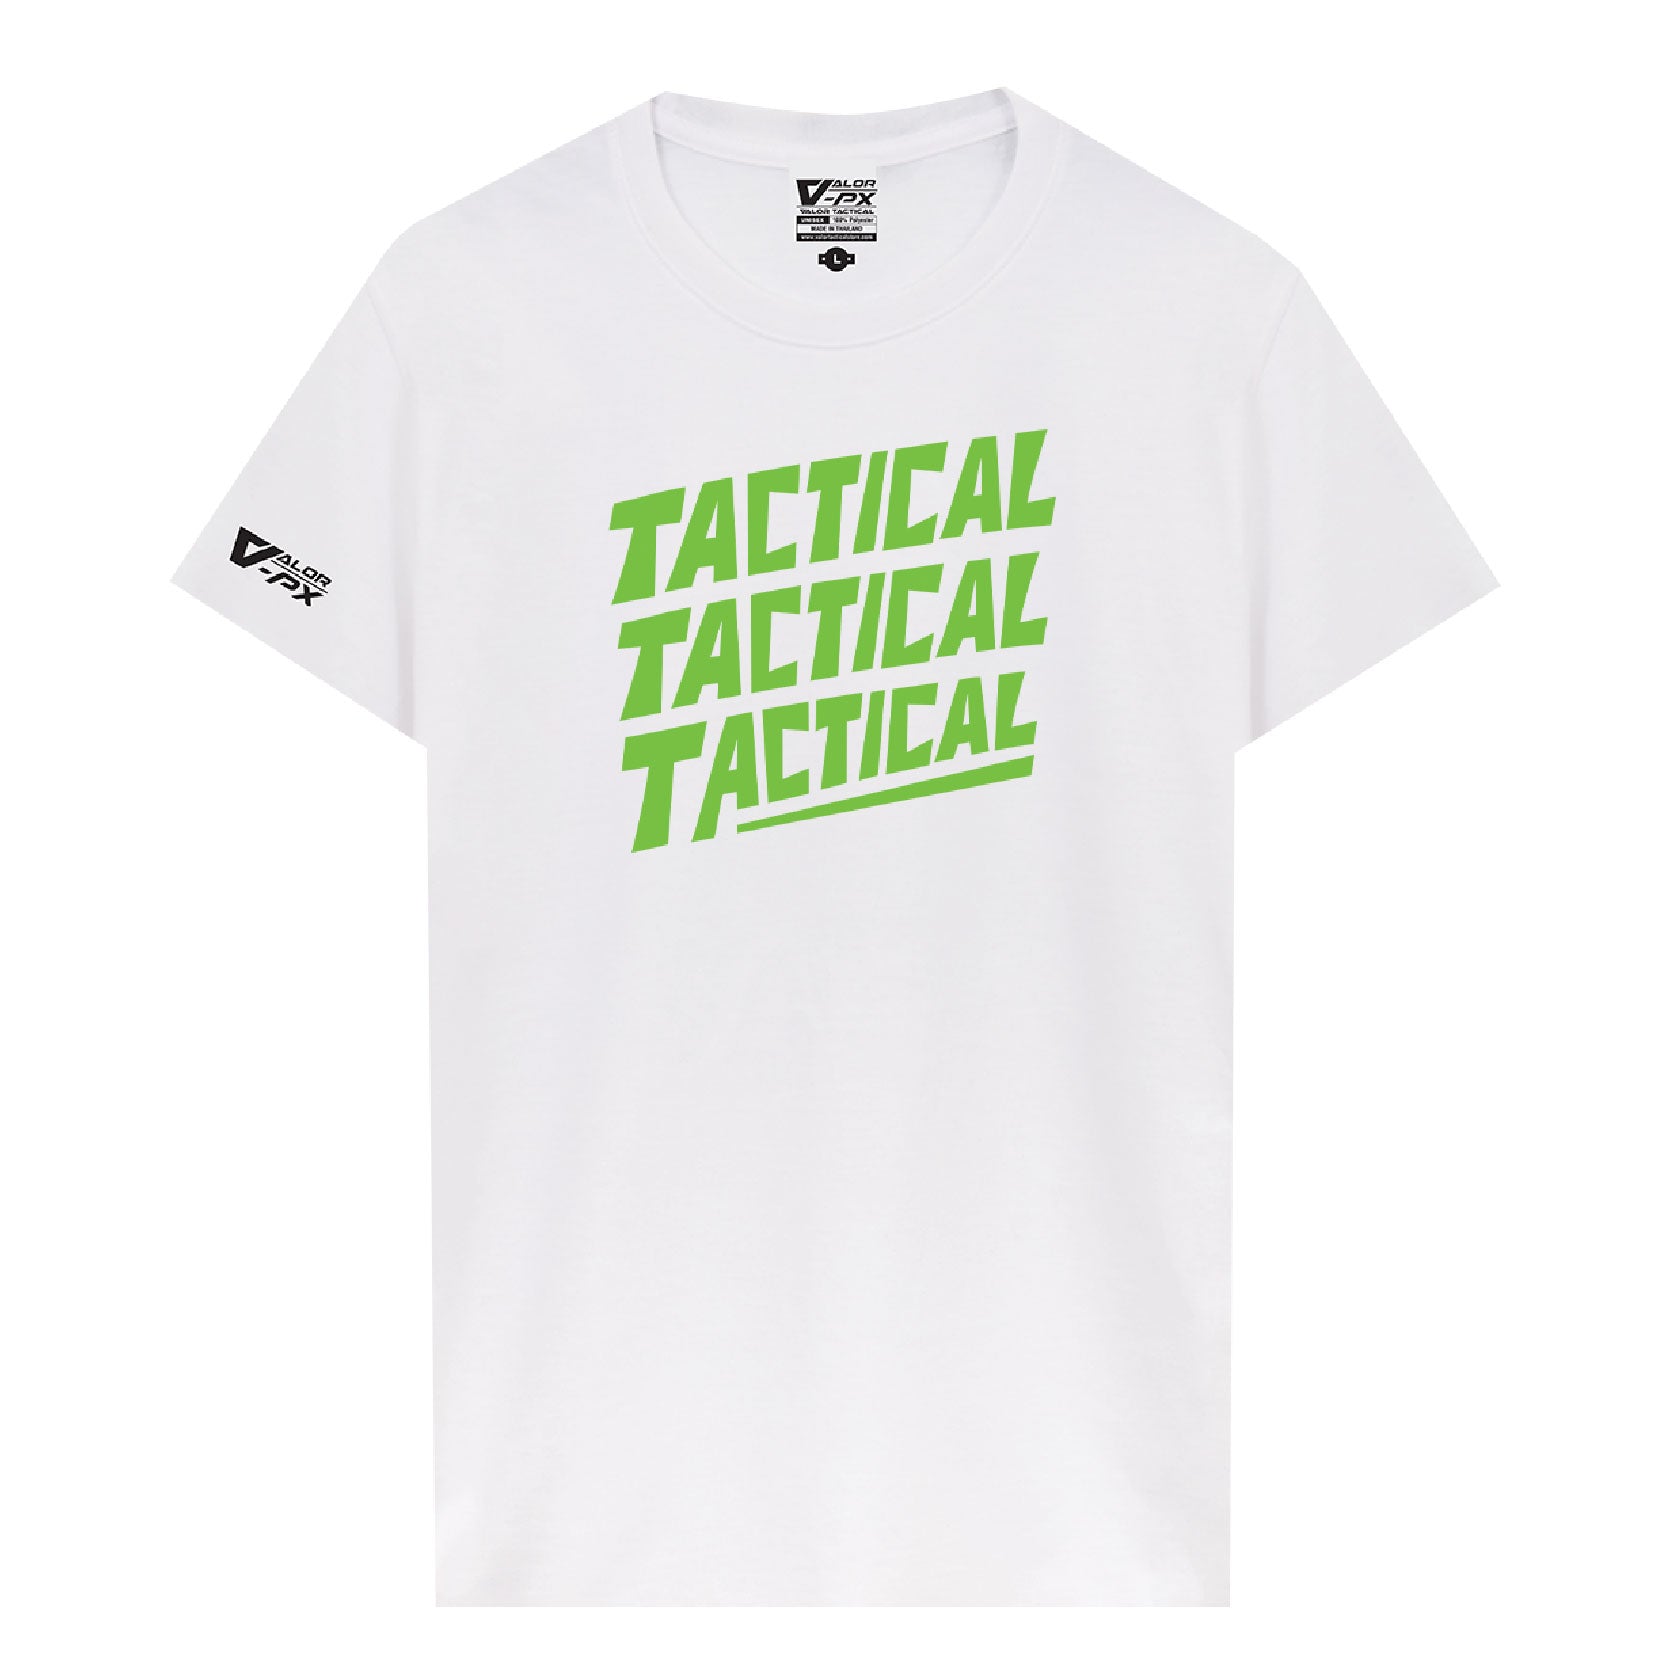 Valor PX Tactical Tactical Tactical T-Shirt